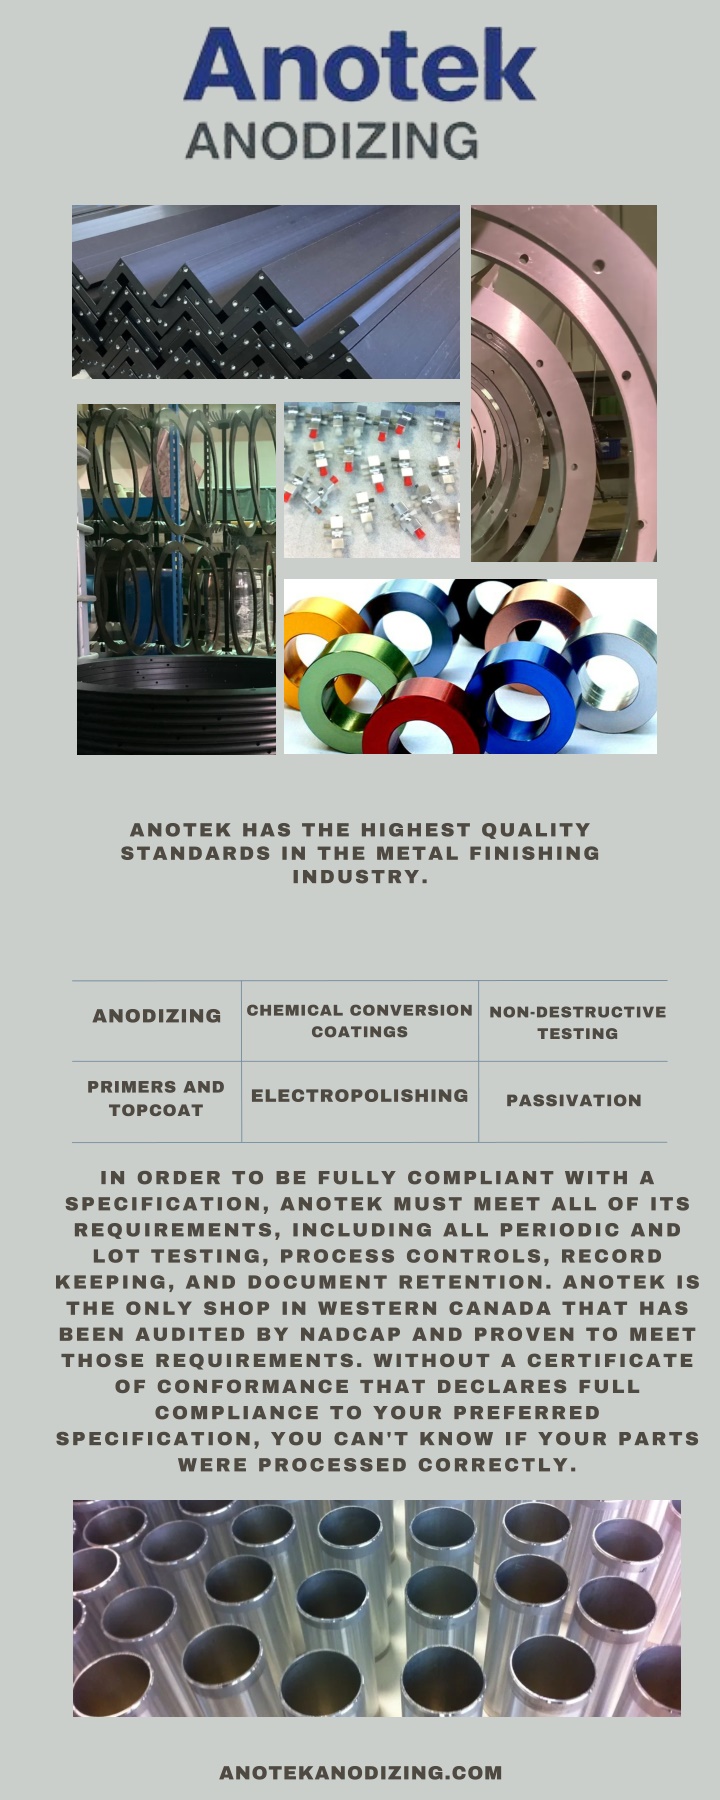 anotek has the highest quality standards